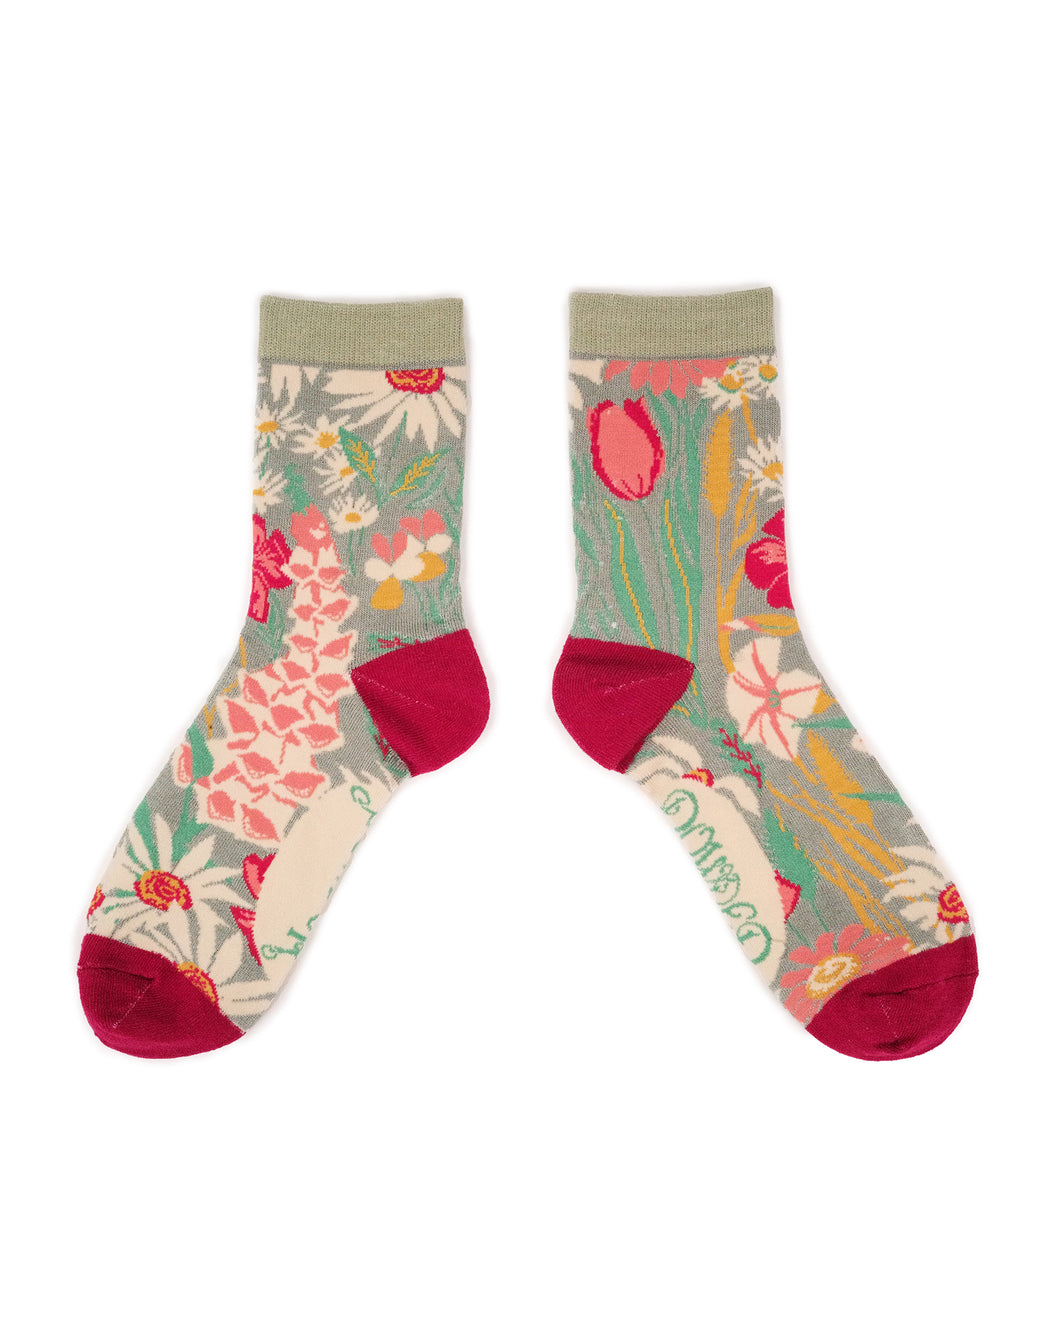 Country Garden Ankle Socks - Mint